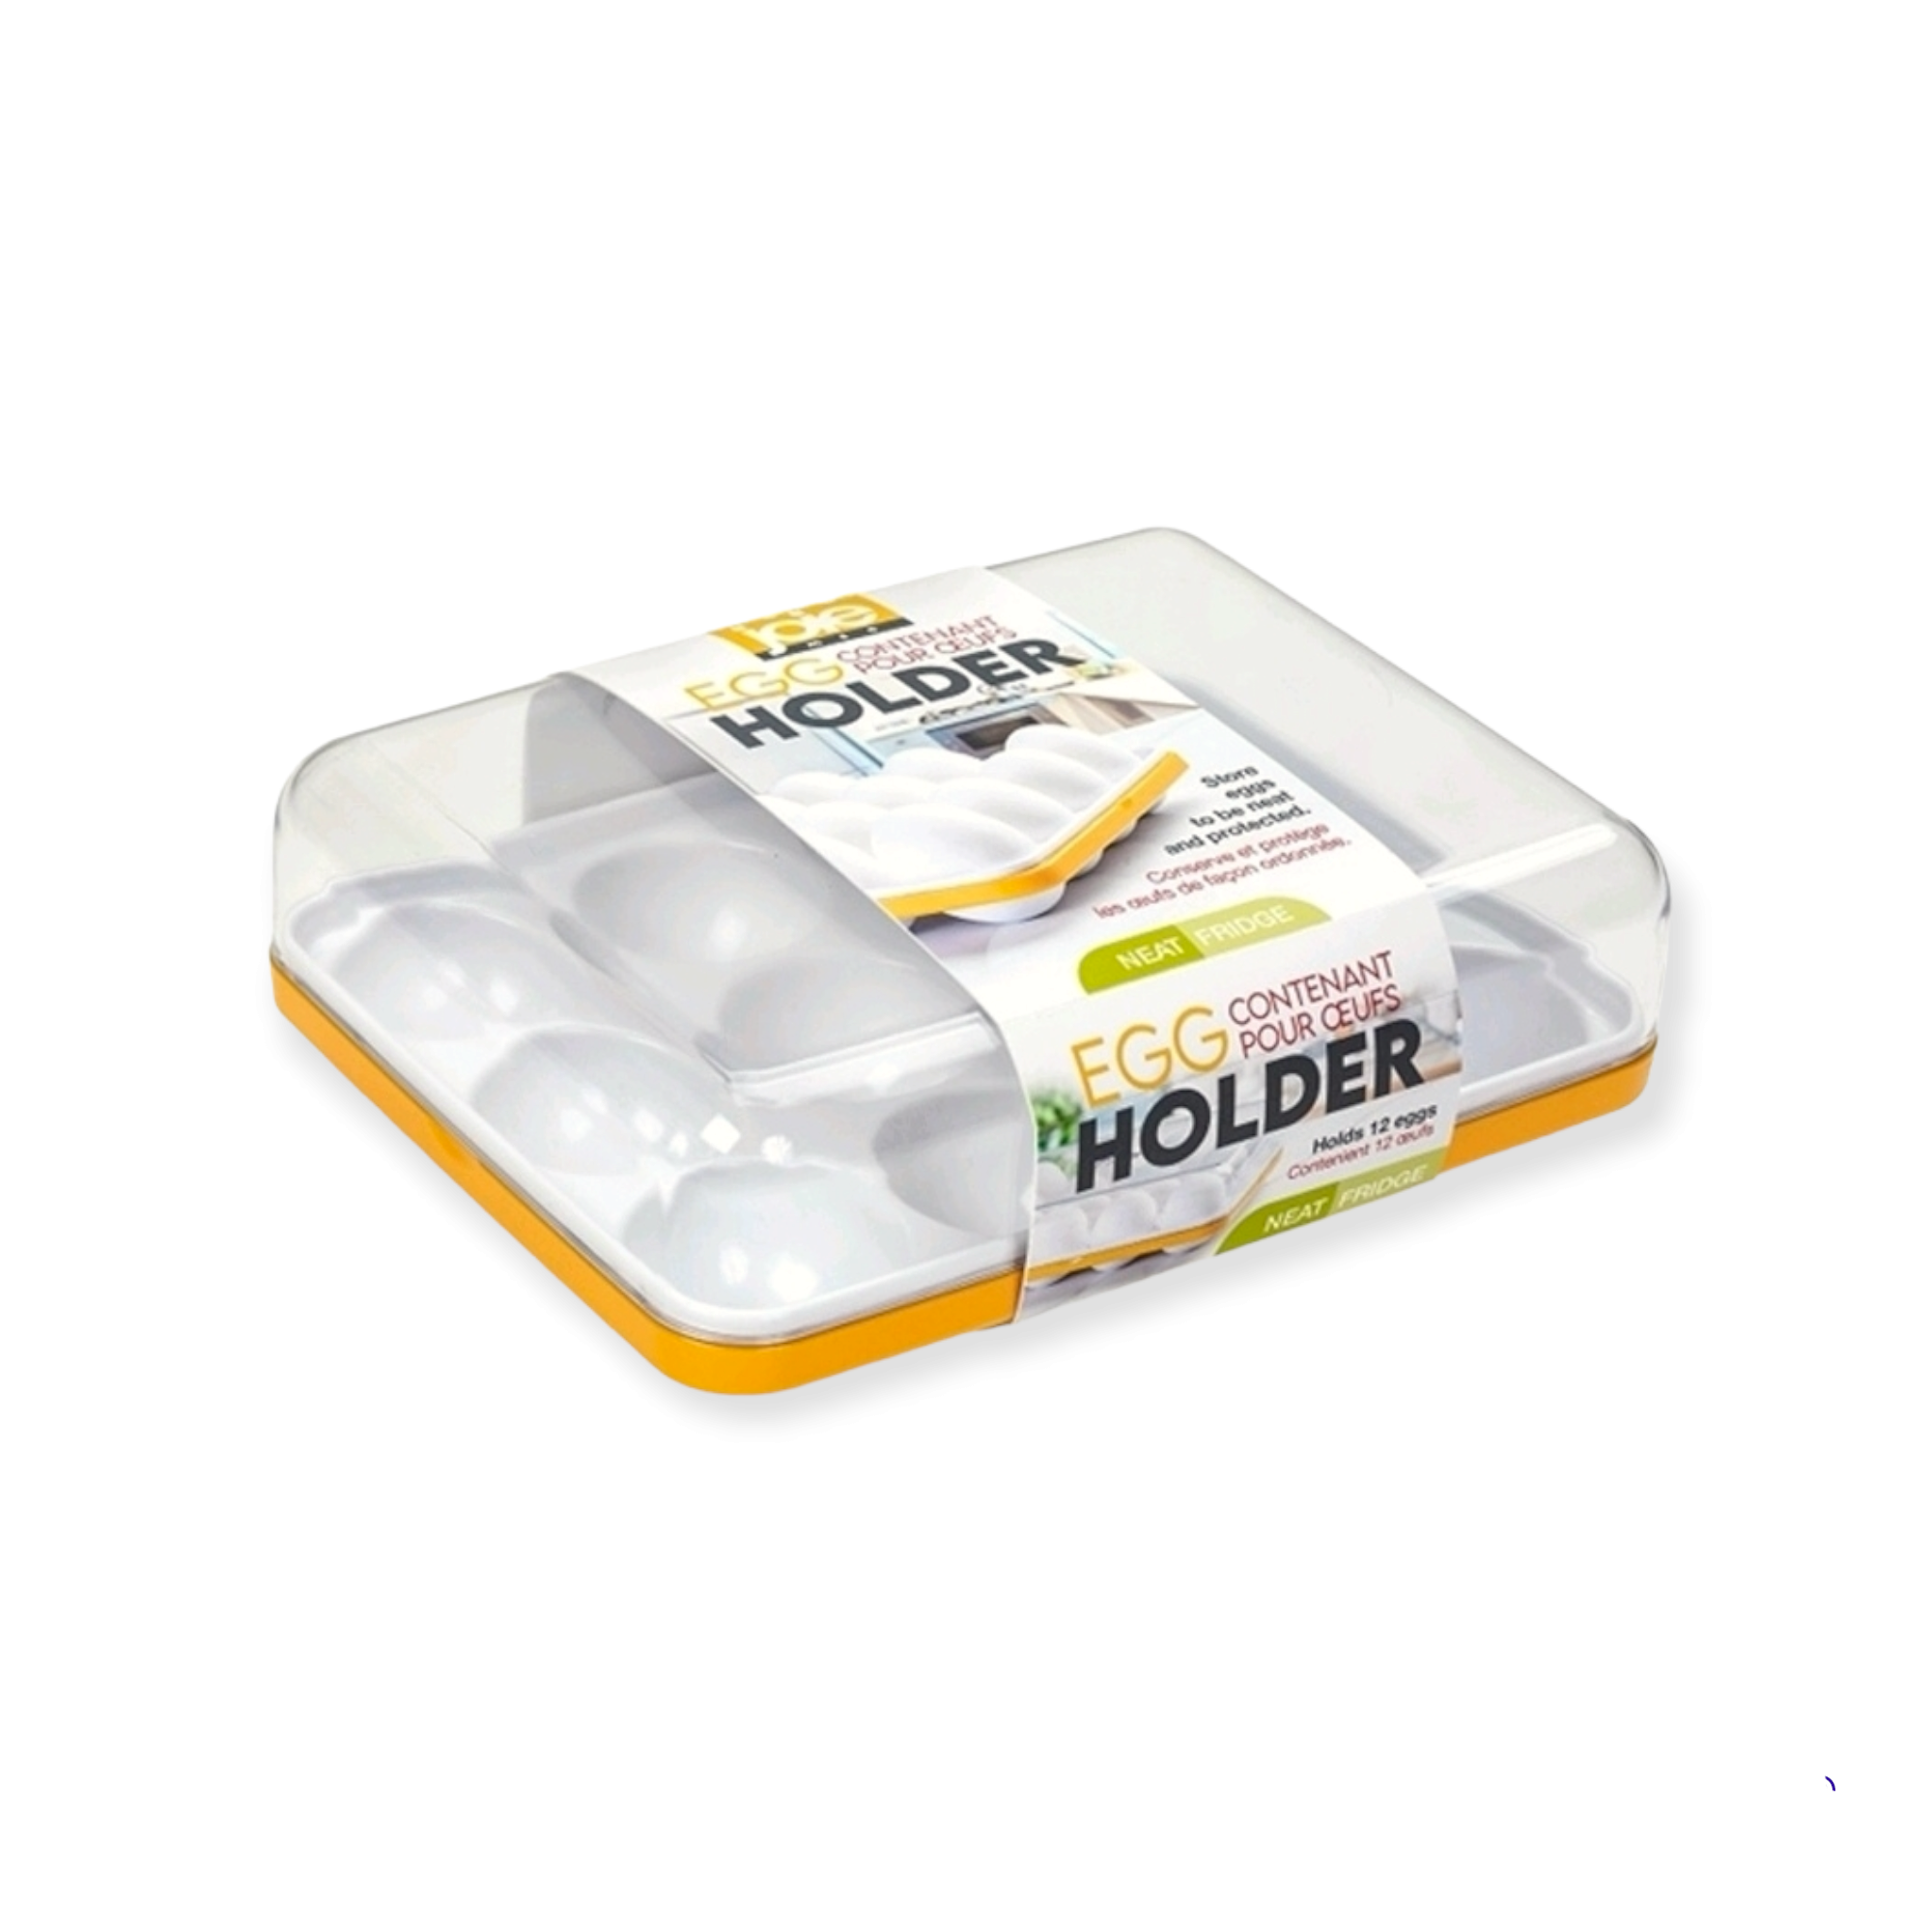 Joie Neat Fridge Egg Storage Tray Holder 12-Grid 14075